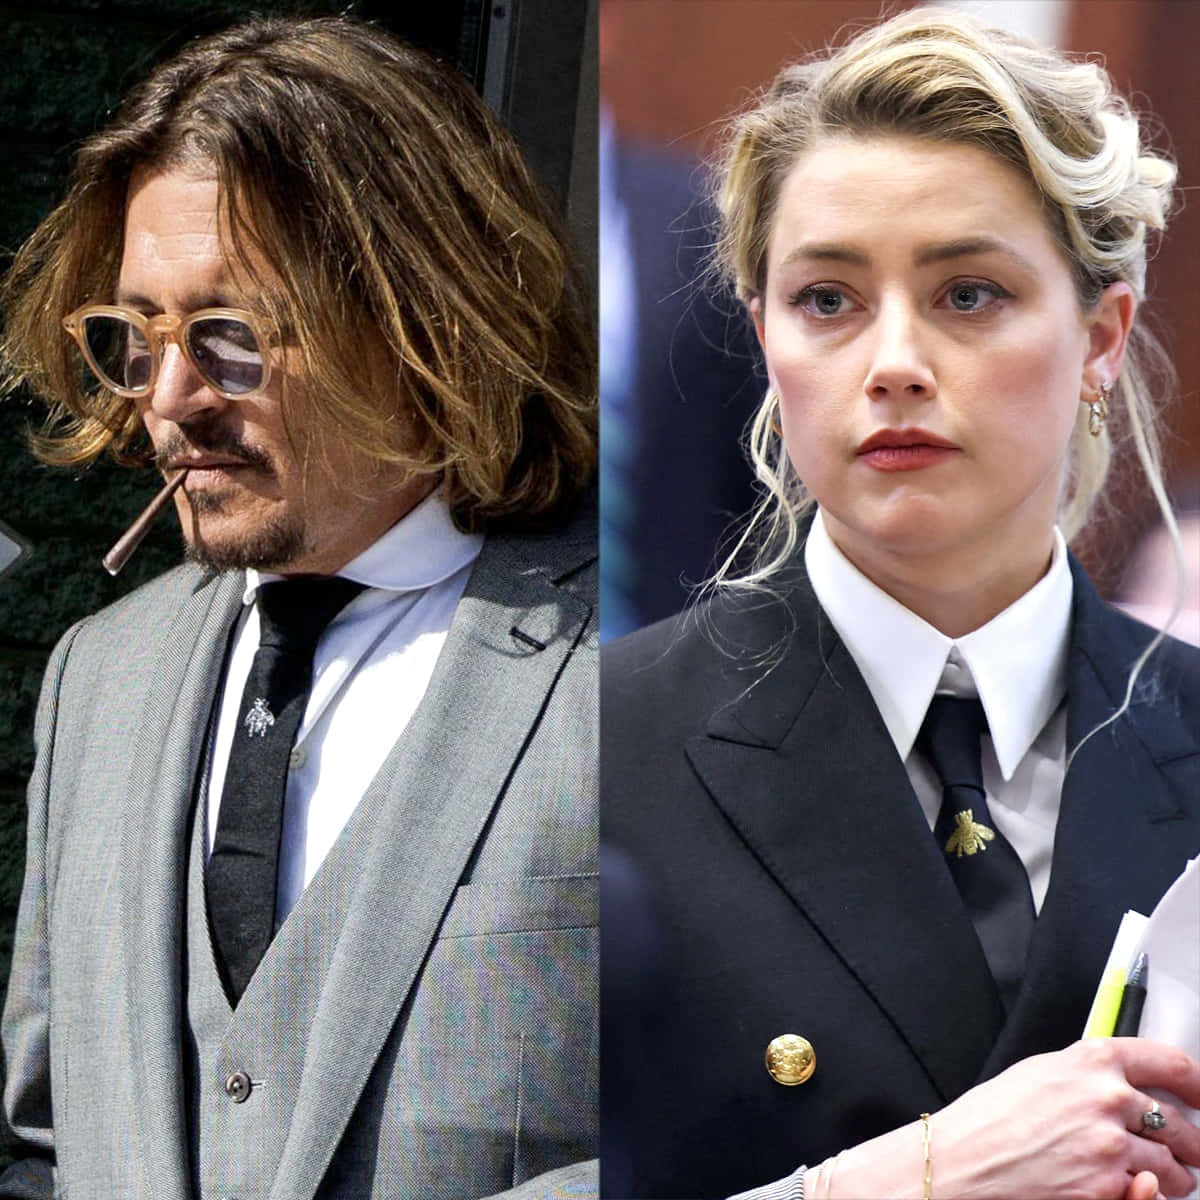 Johnny Depp and Amber Heard, a Hollywood power couple